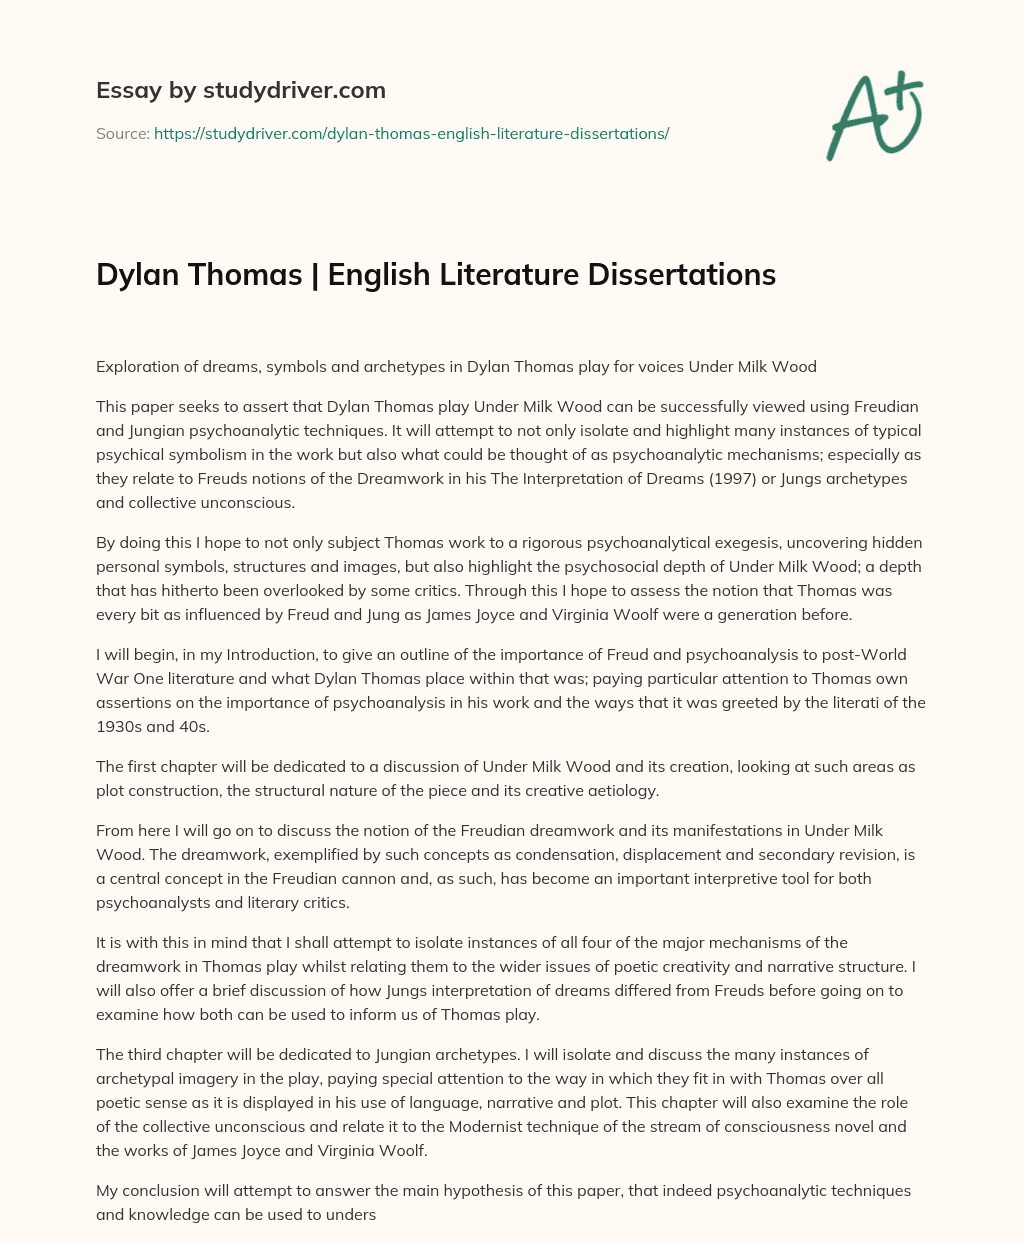 Dylan Thomas | English Literature Dissertations essay